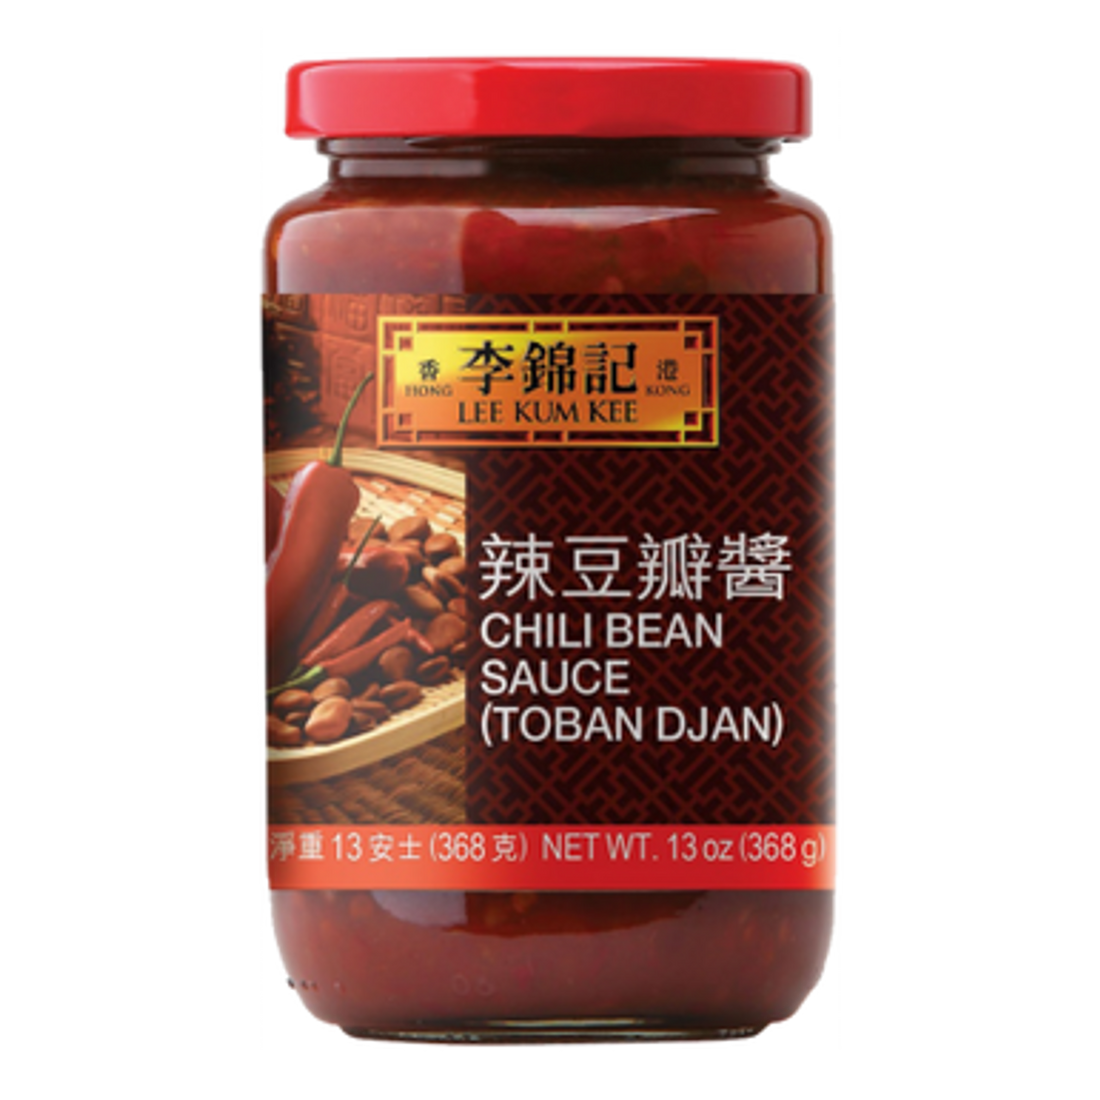 Lee Kum Kee Chili Bean Sauce 13oz(368g) - Anytime Basket